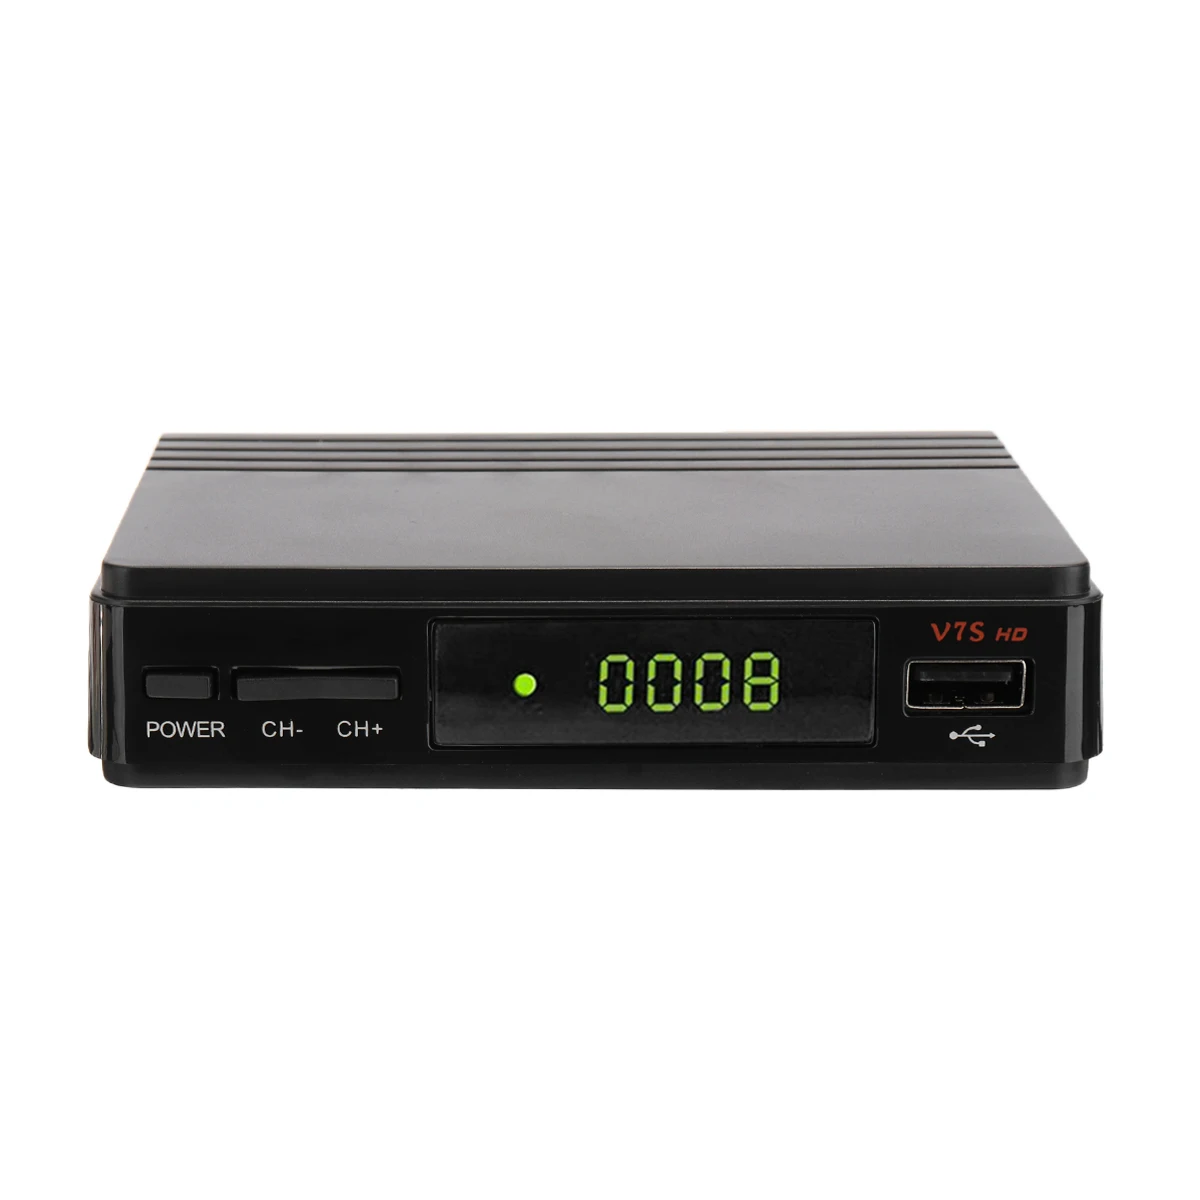 Mayitr DVB-S2 Wi-Fi телевизионная приставка HD FTA цифровой спутниковый ТВ приемник 1080P Full HD 3g USB поддержка сетевого обмена